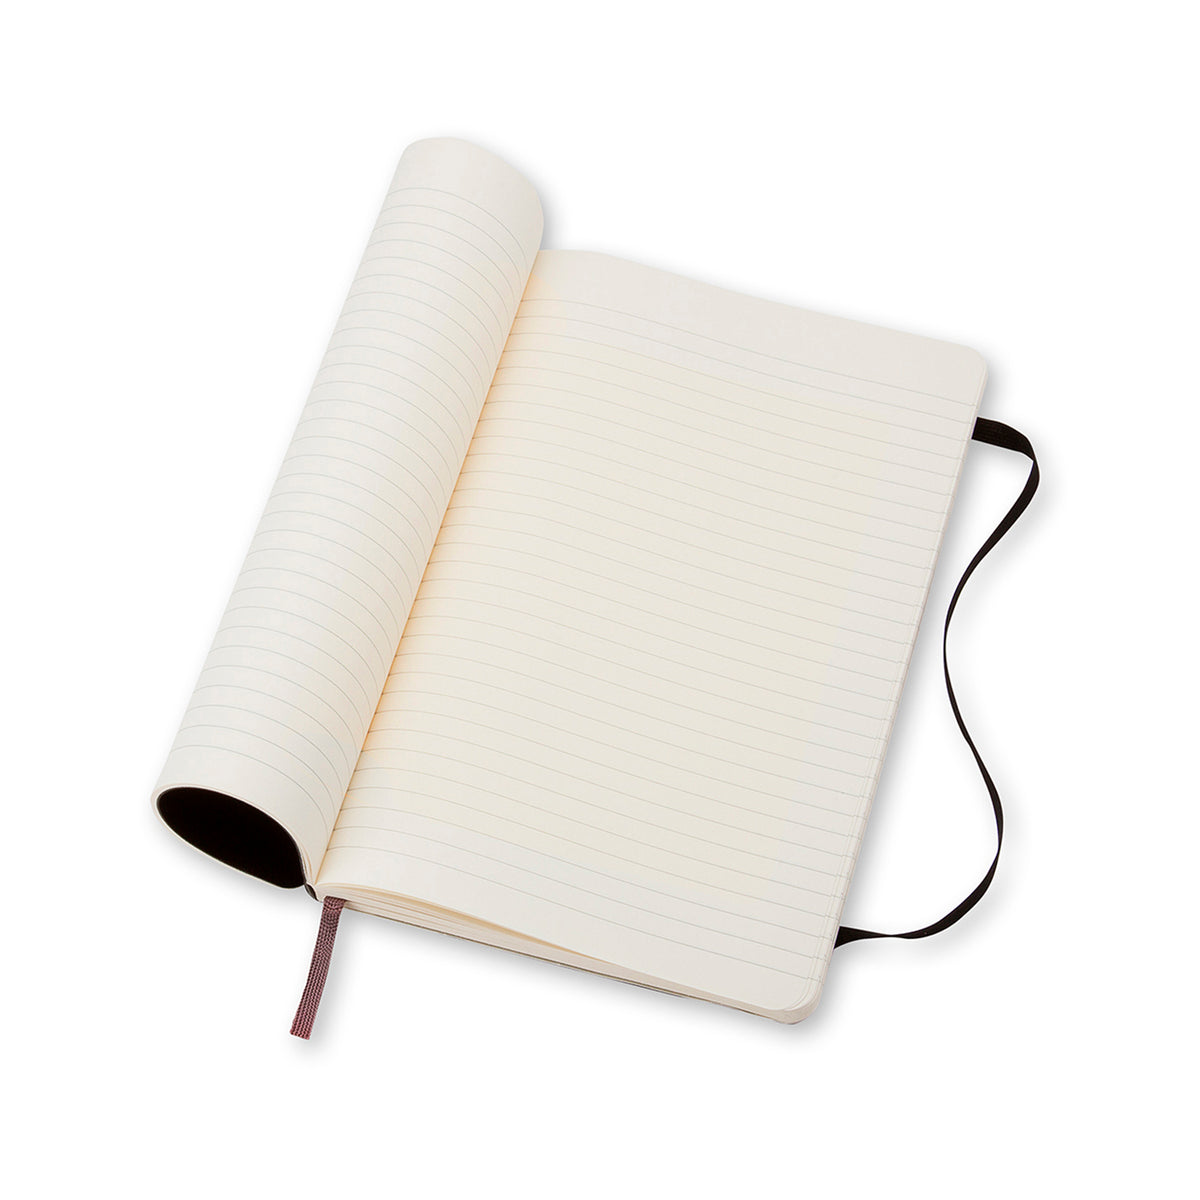 Moleskine - Classic Soft Cover Notebook - Ruled - Large - Black